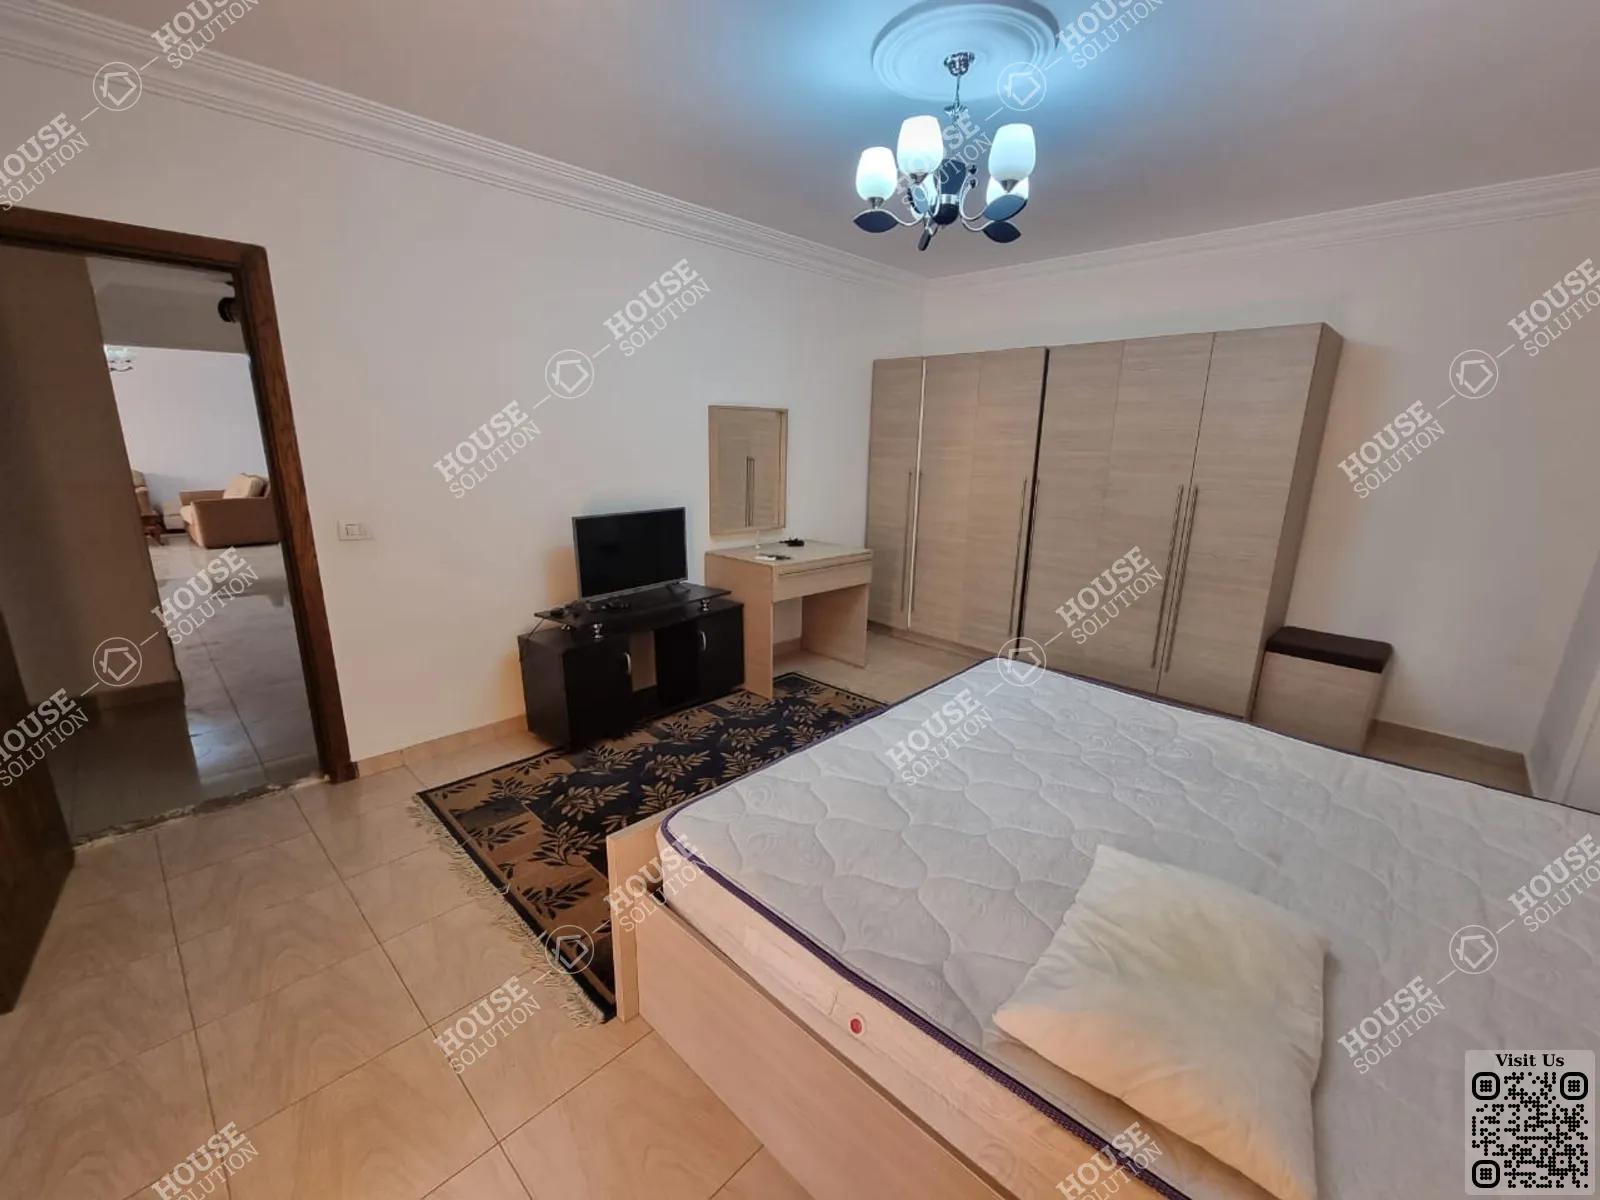 THIRD BEDROOM  @ Apartments For Rent In Maadi Maadi Sarayat Area: 175 m² consists of 3 Bedrooms 2 Bathrooms Modern furnished 5 stars #5601-0